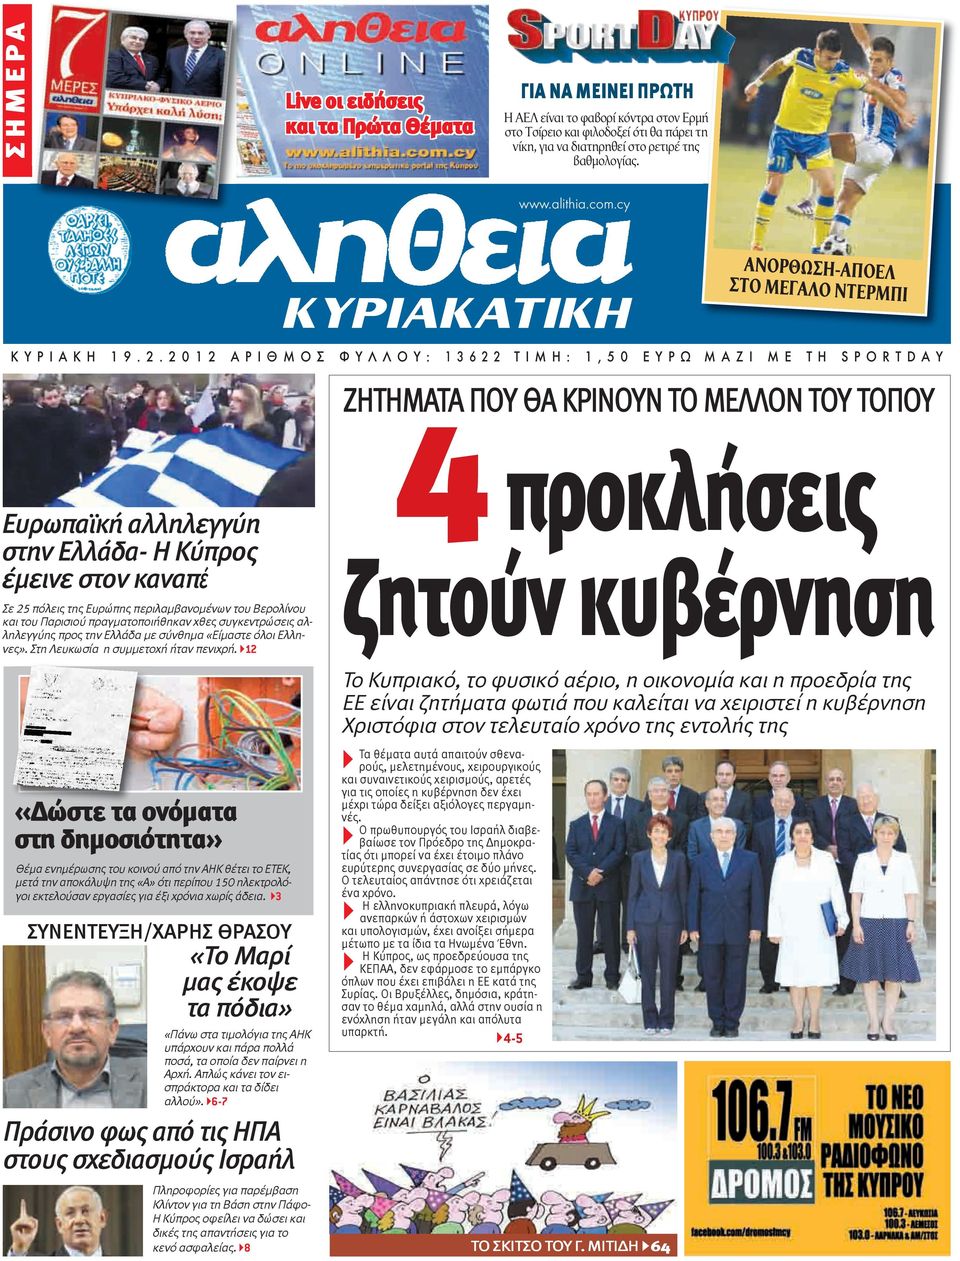 2 0 1 2 Α Ρ Ι Θ Μ Ο Σ Φ Υ Λ Λ Ο Υ : 1 3 6 2 2 Τ Ι Μ Η : 1, 5 0 Ε Υ Ρ Ω Μ Α Ζ Ι Μ Ε Τ Η S P O R T D A Υ Ευρωπαϊκή αλληλεγγύη στην Ελλάδα- Η Κύπρος έμεινε στον καναπέ Σε 25 πόλεις της Ευρώπης